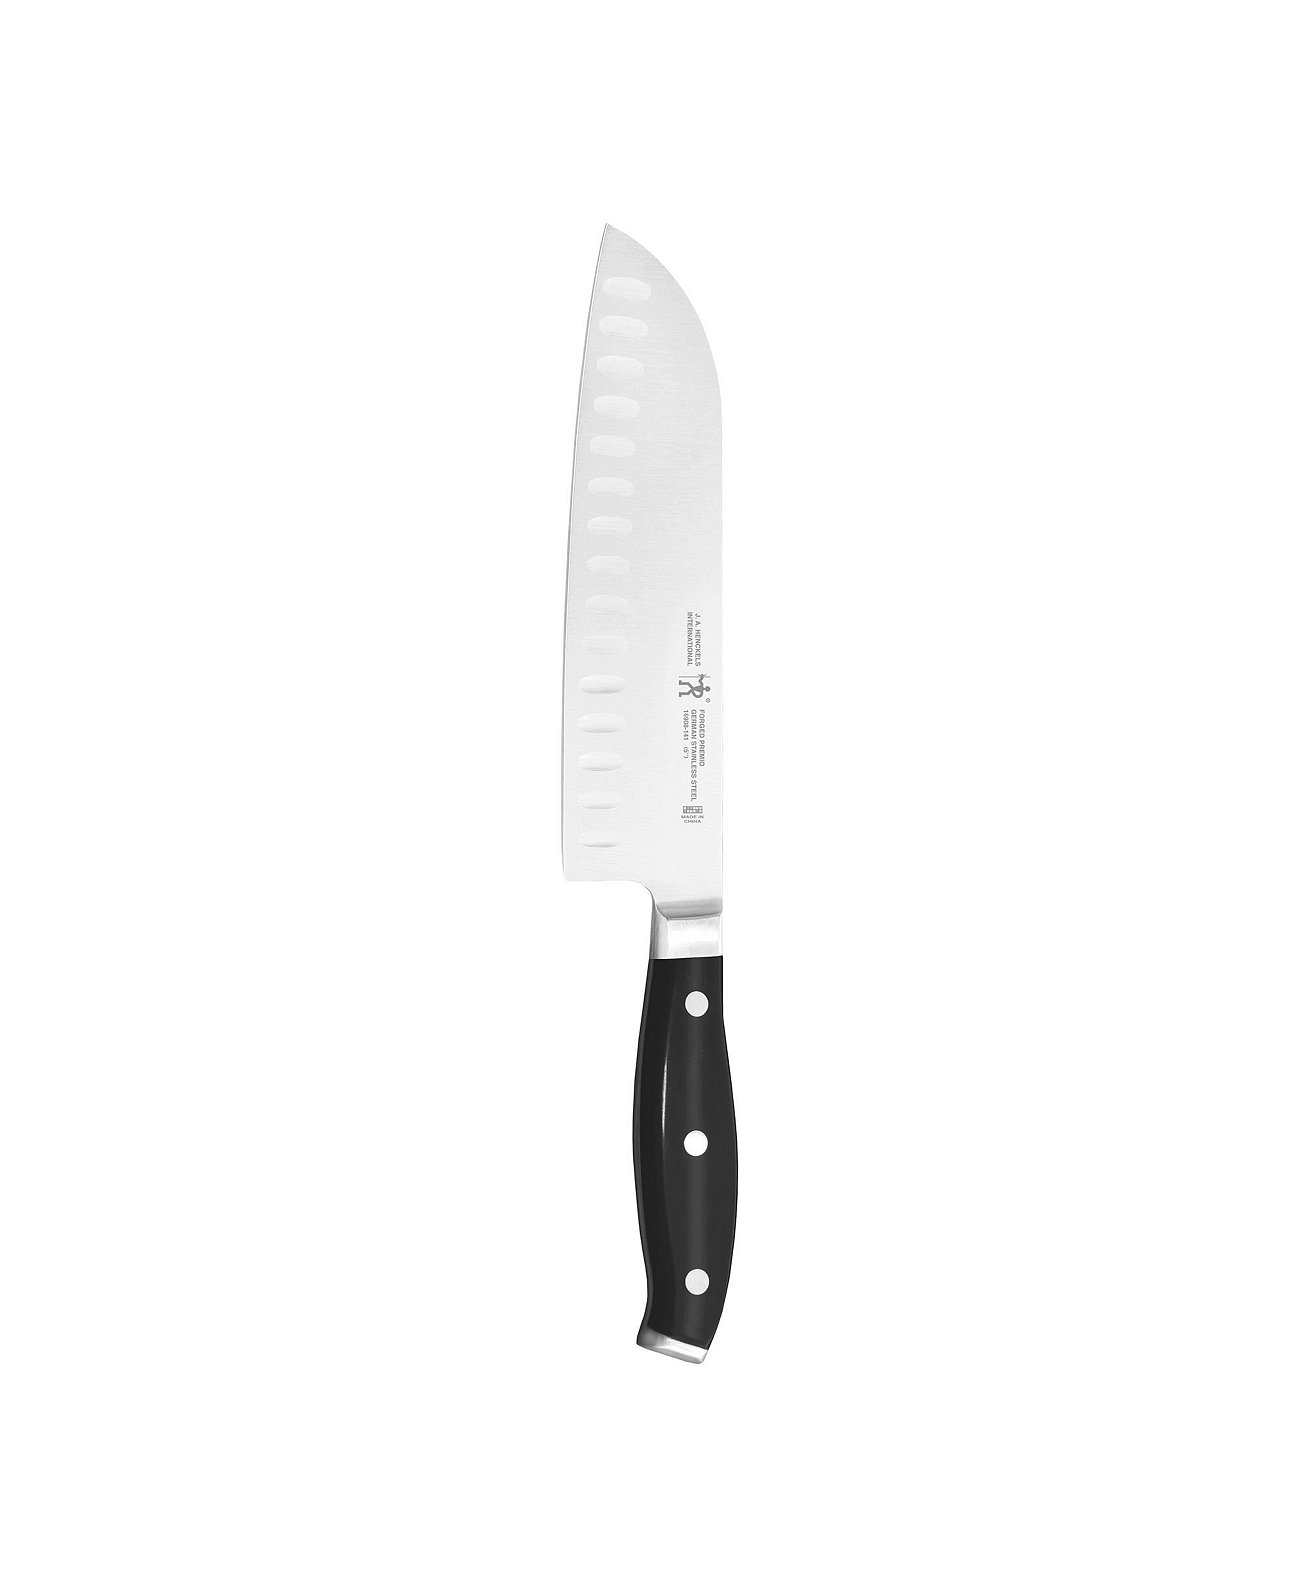 Нож Santoku International Forged Premio 5 дюймов с полым лезвием J.A. Henckels